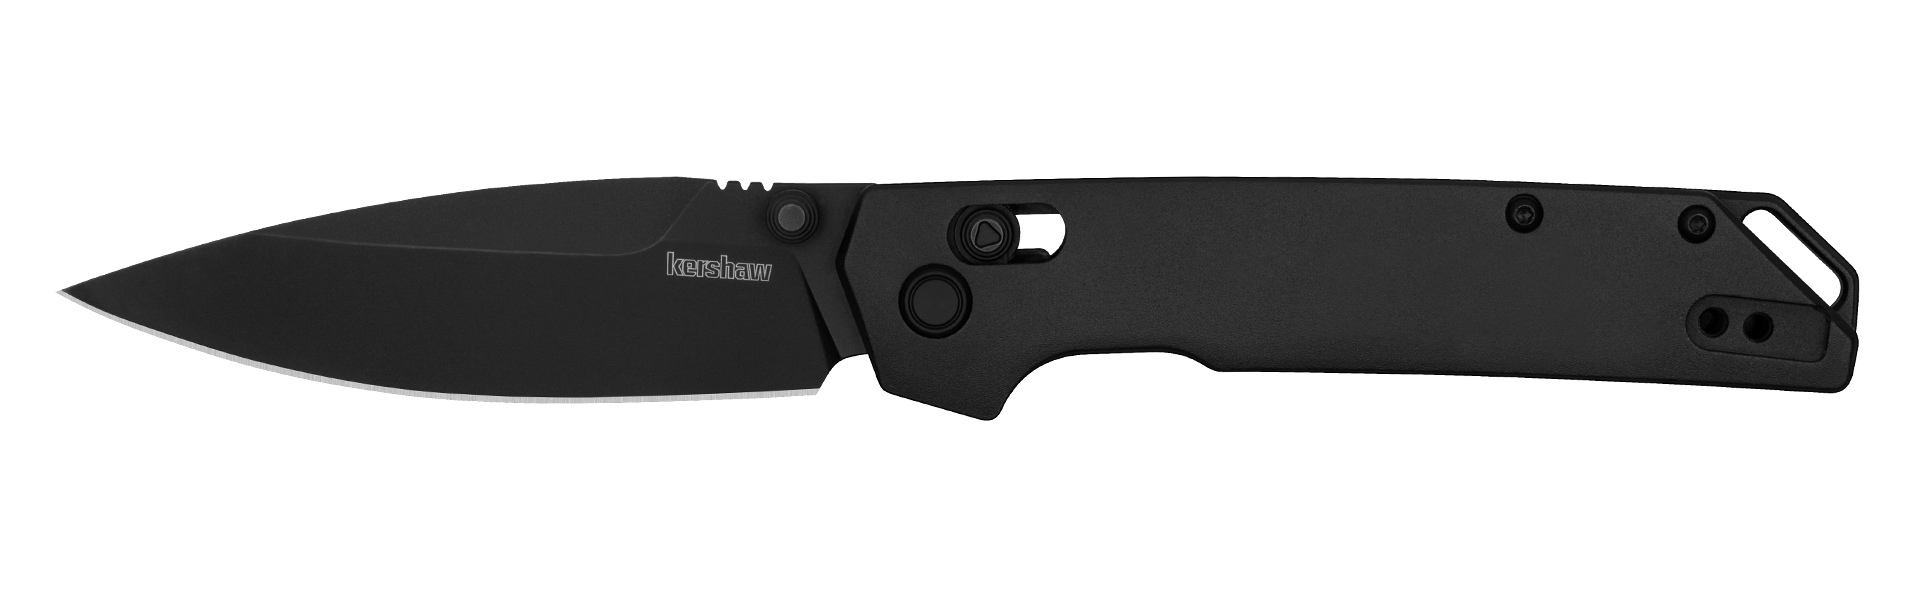 Kershaw Black Iridium DuraLock Knife